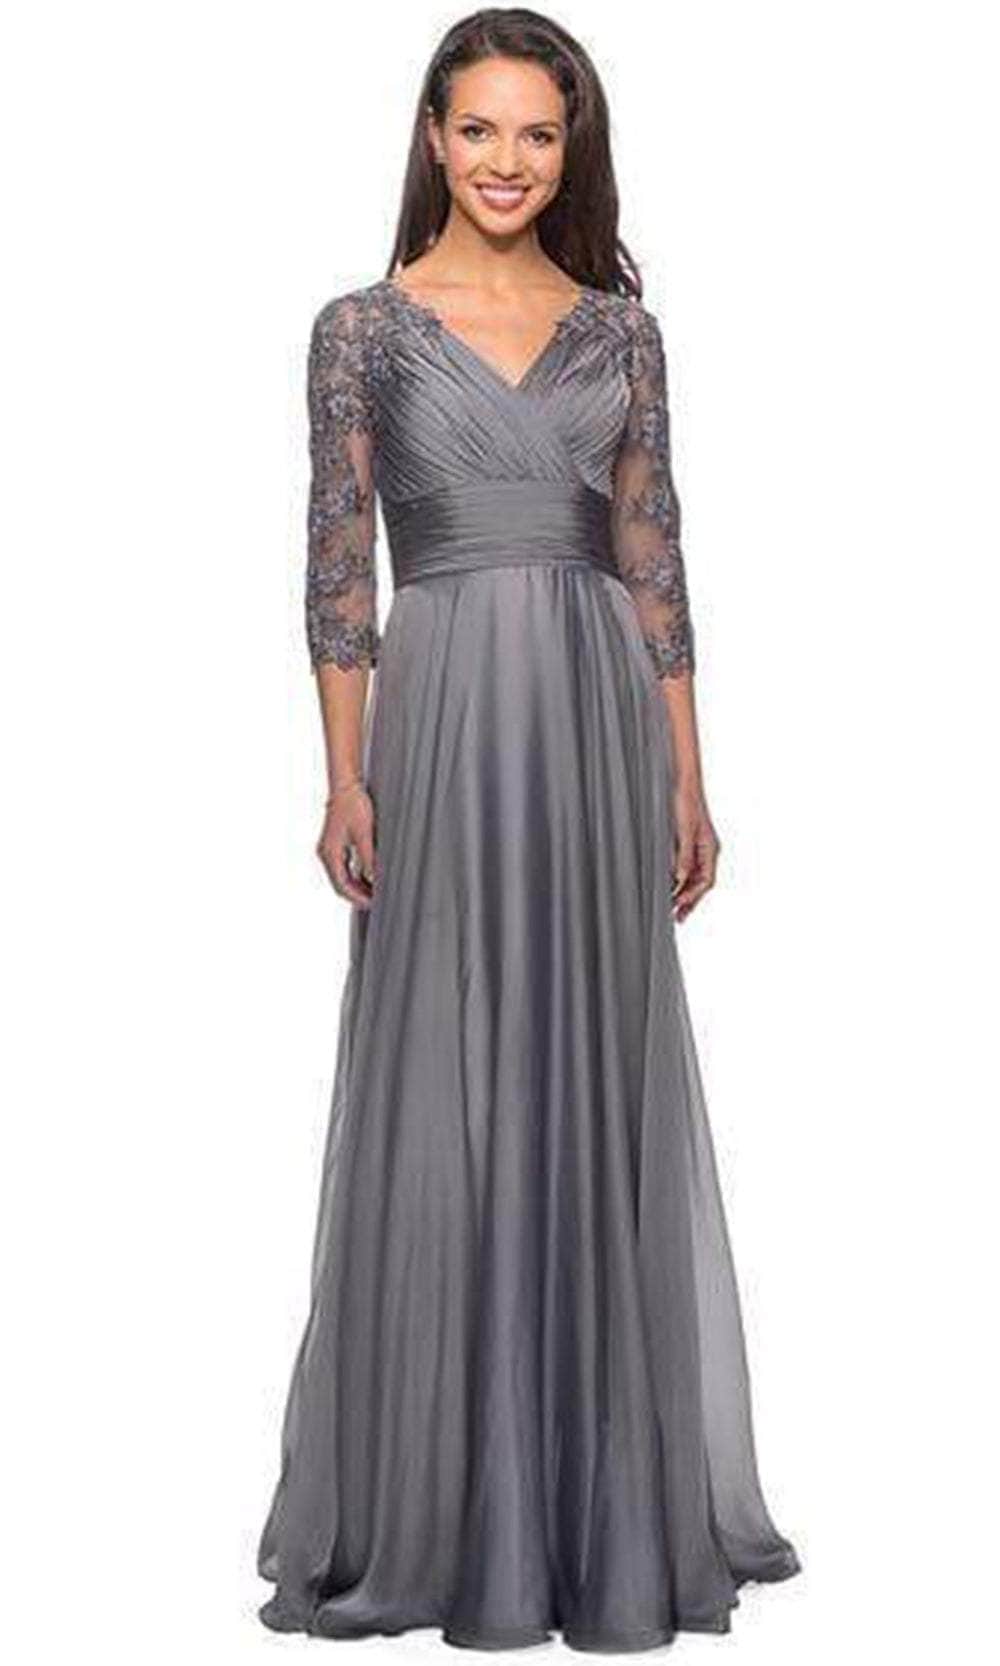 La Femme - 27153 Sheer Lace Quarter Sleeves Empire Waist Chiffon Gown
